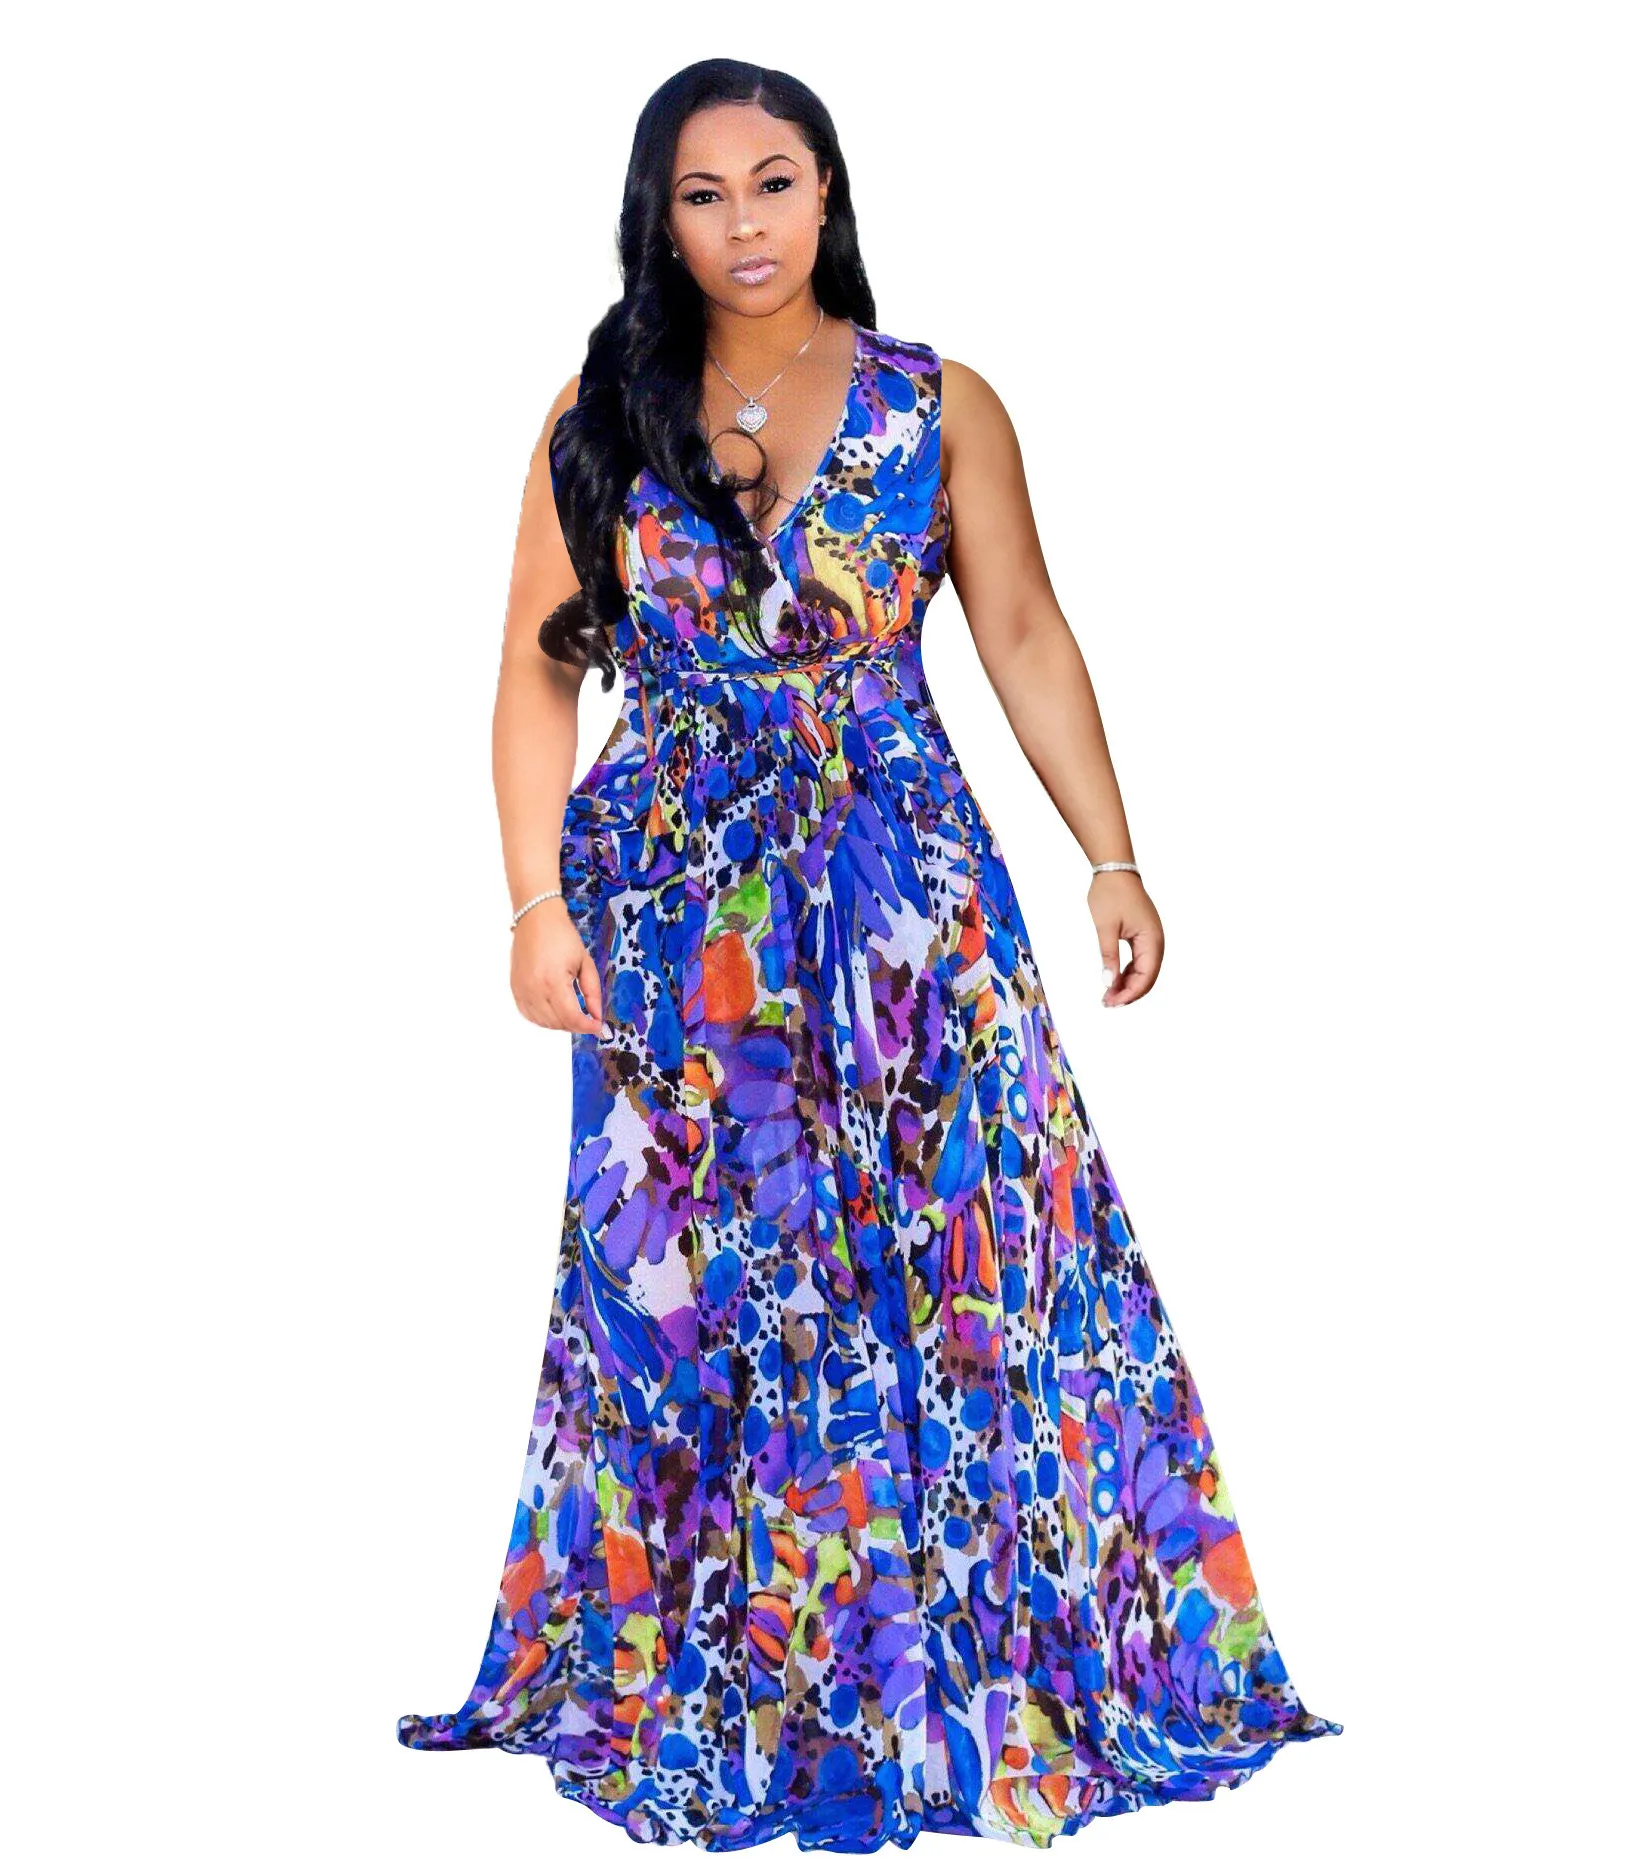 Summer Women Maxi Dress Floral print Chiffon Plus Size boho style vestidos Elegant Beach Long Dress Big Size Dresses T200604